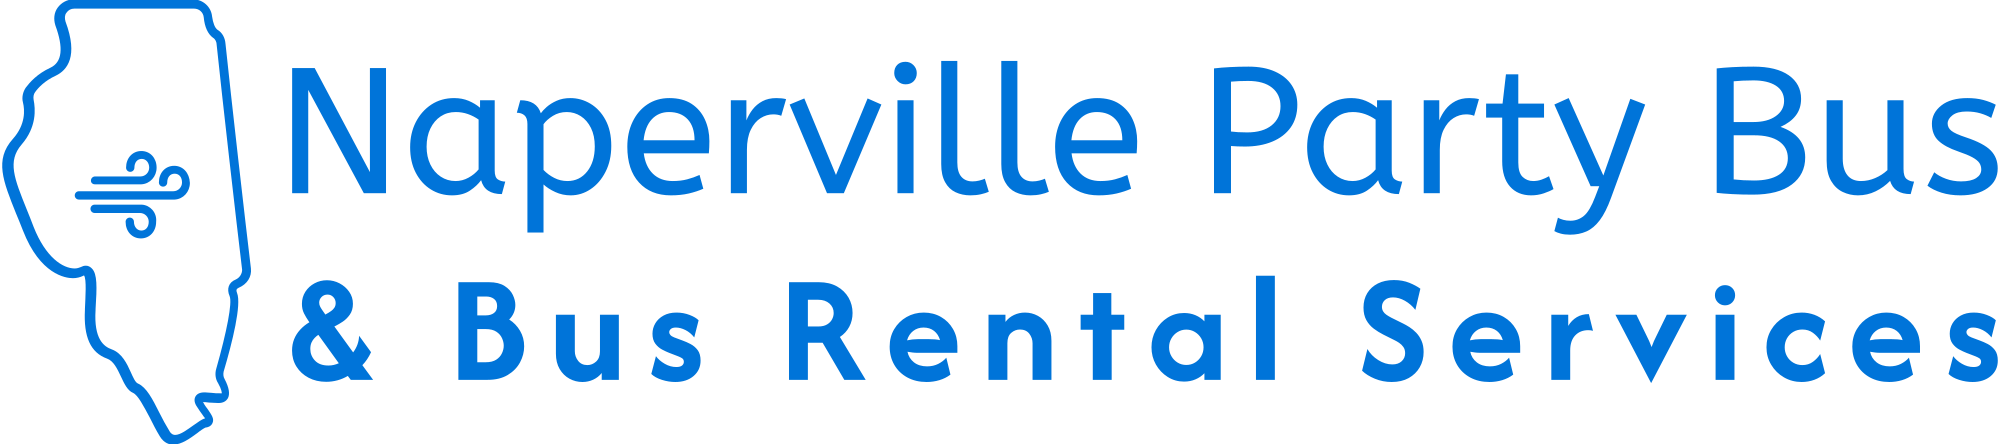 Naperville Party Bus Company logo